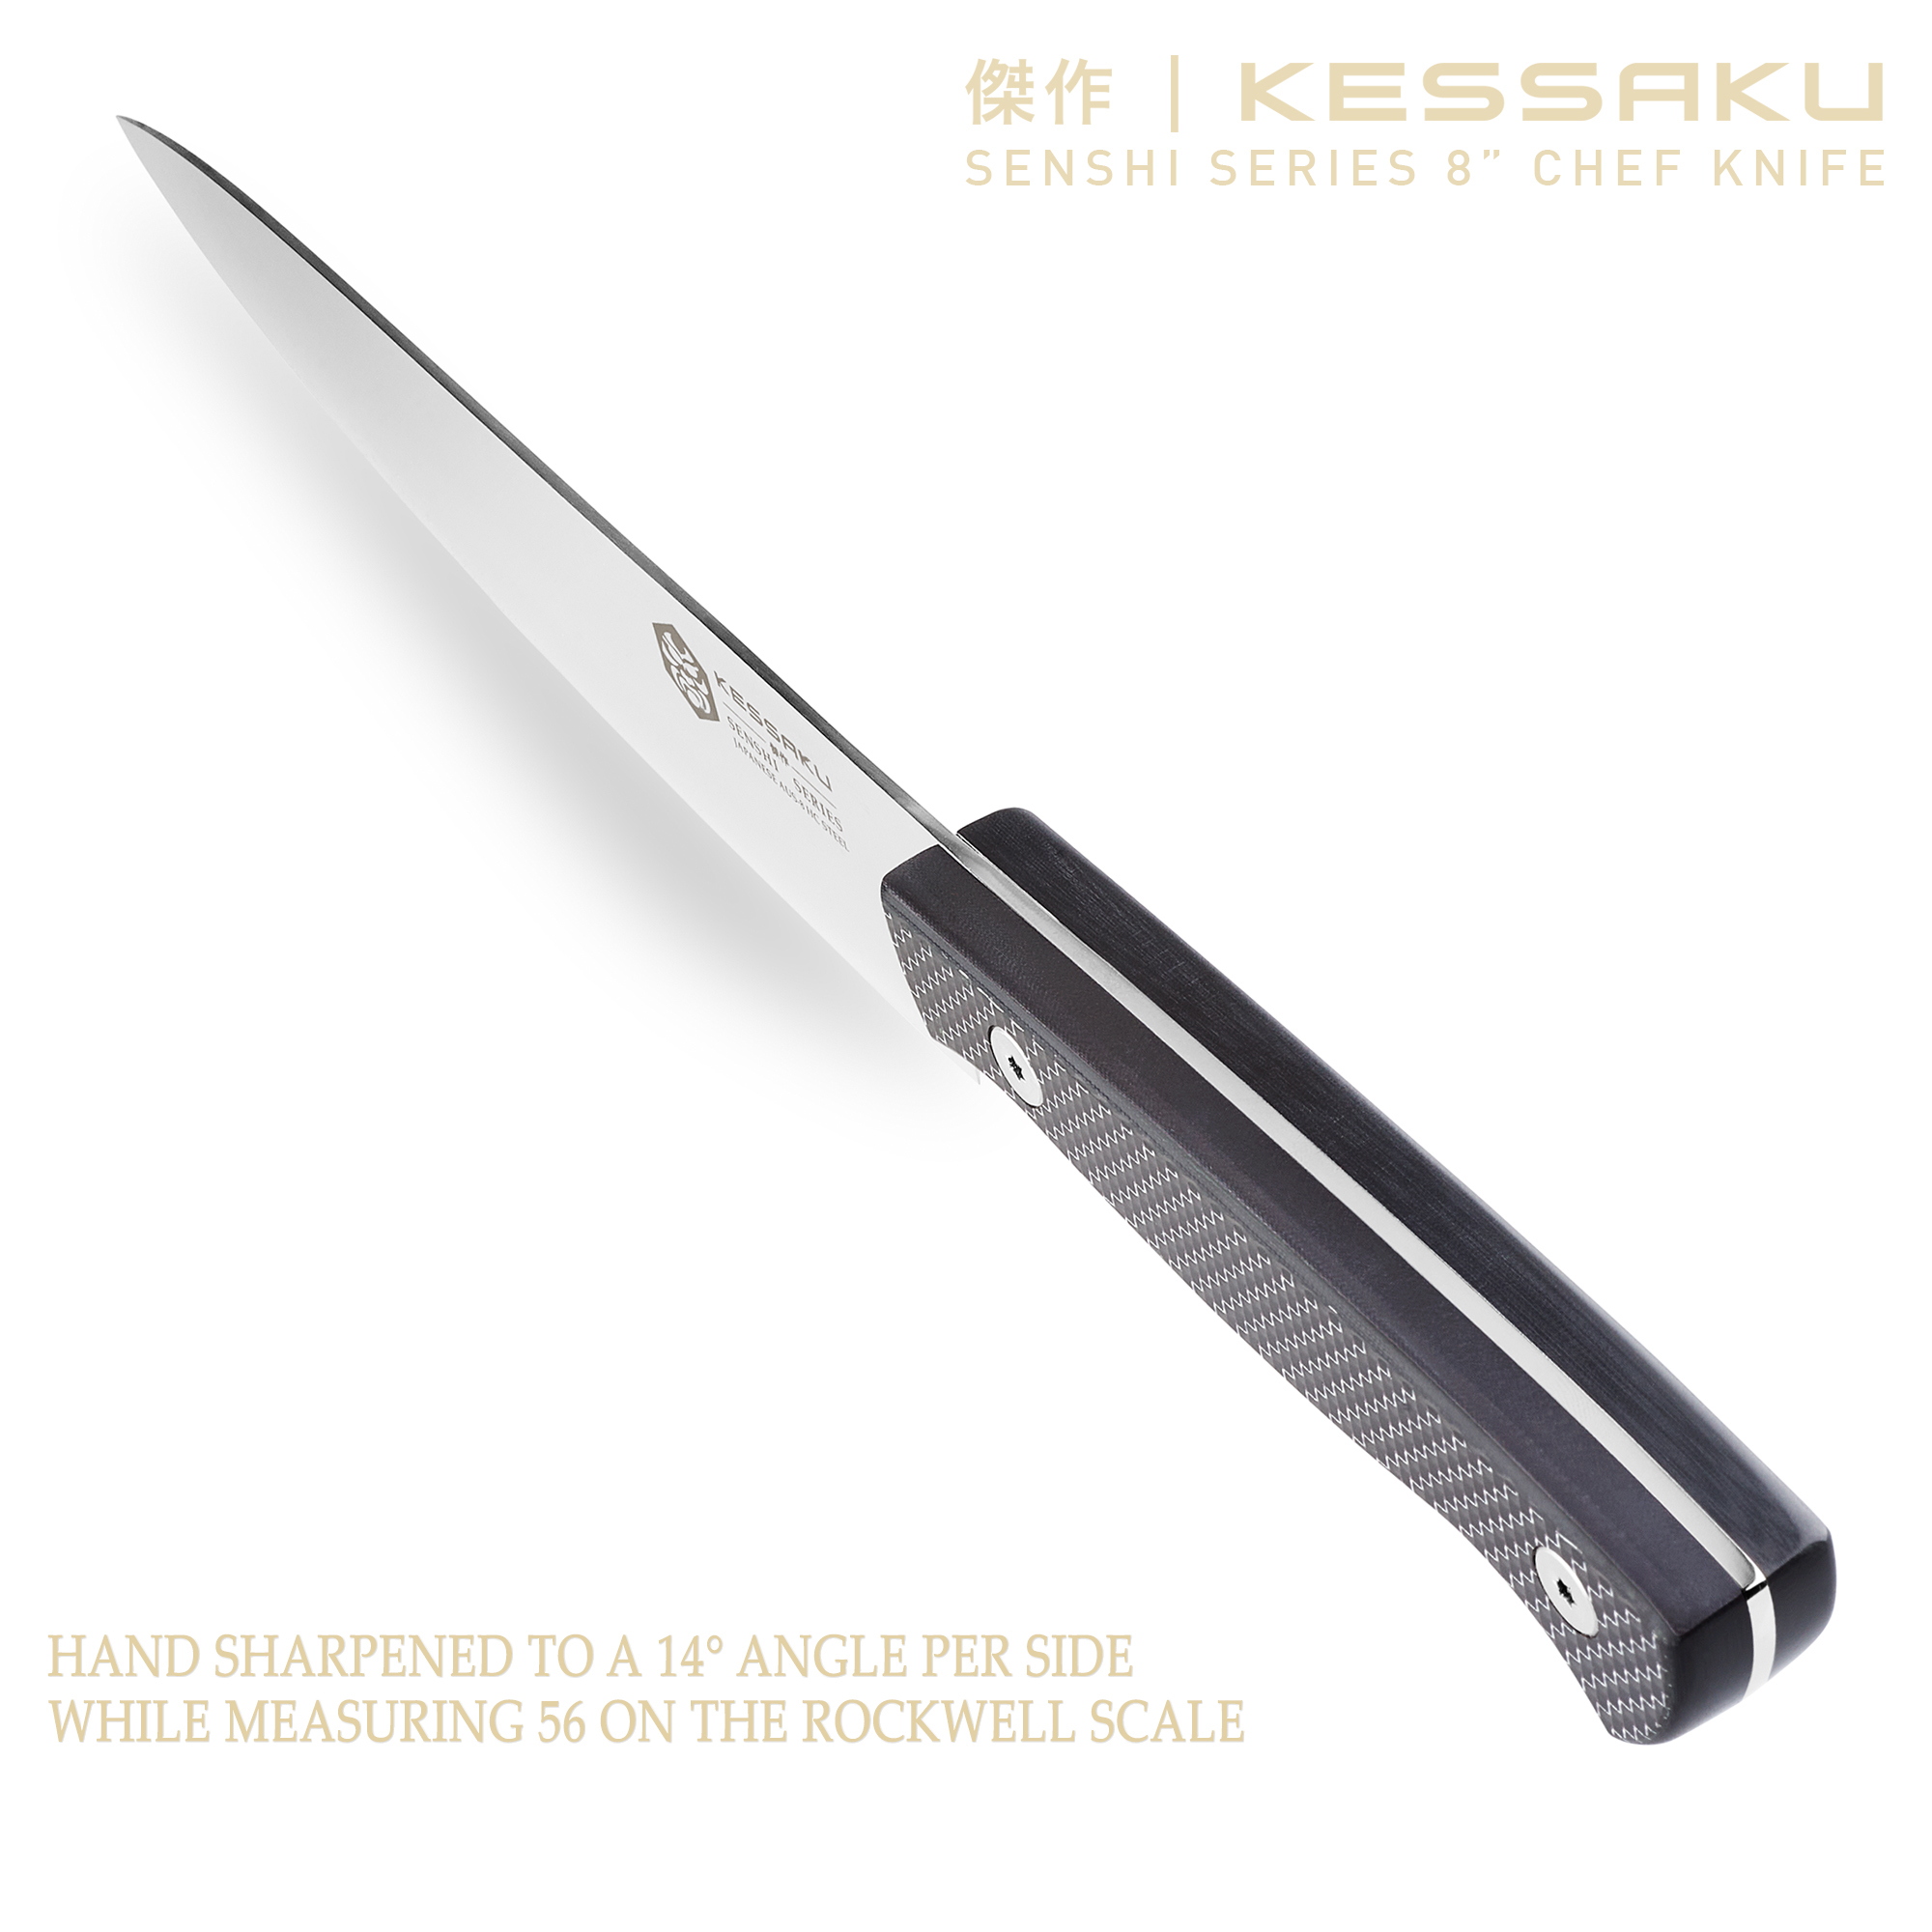 Kessaku 8-Inch Chef and 8-Inch Nakiri - Senshi Series Knife Set - High Carbon AUS-8 Stainless Steel - Carbon Fiber G10 Handle